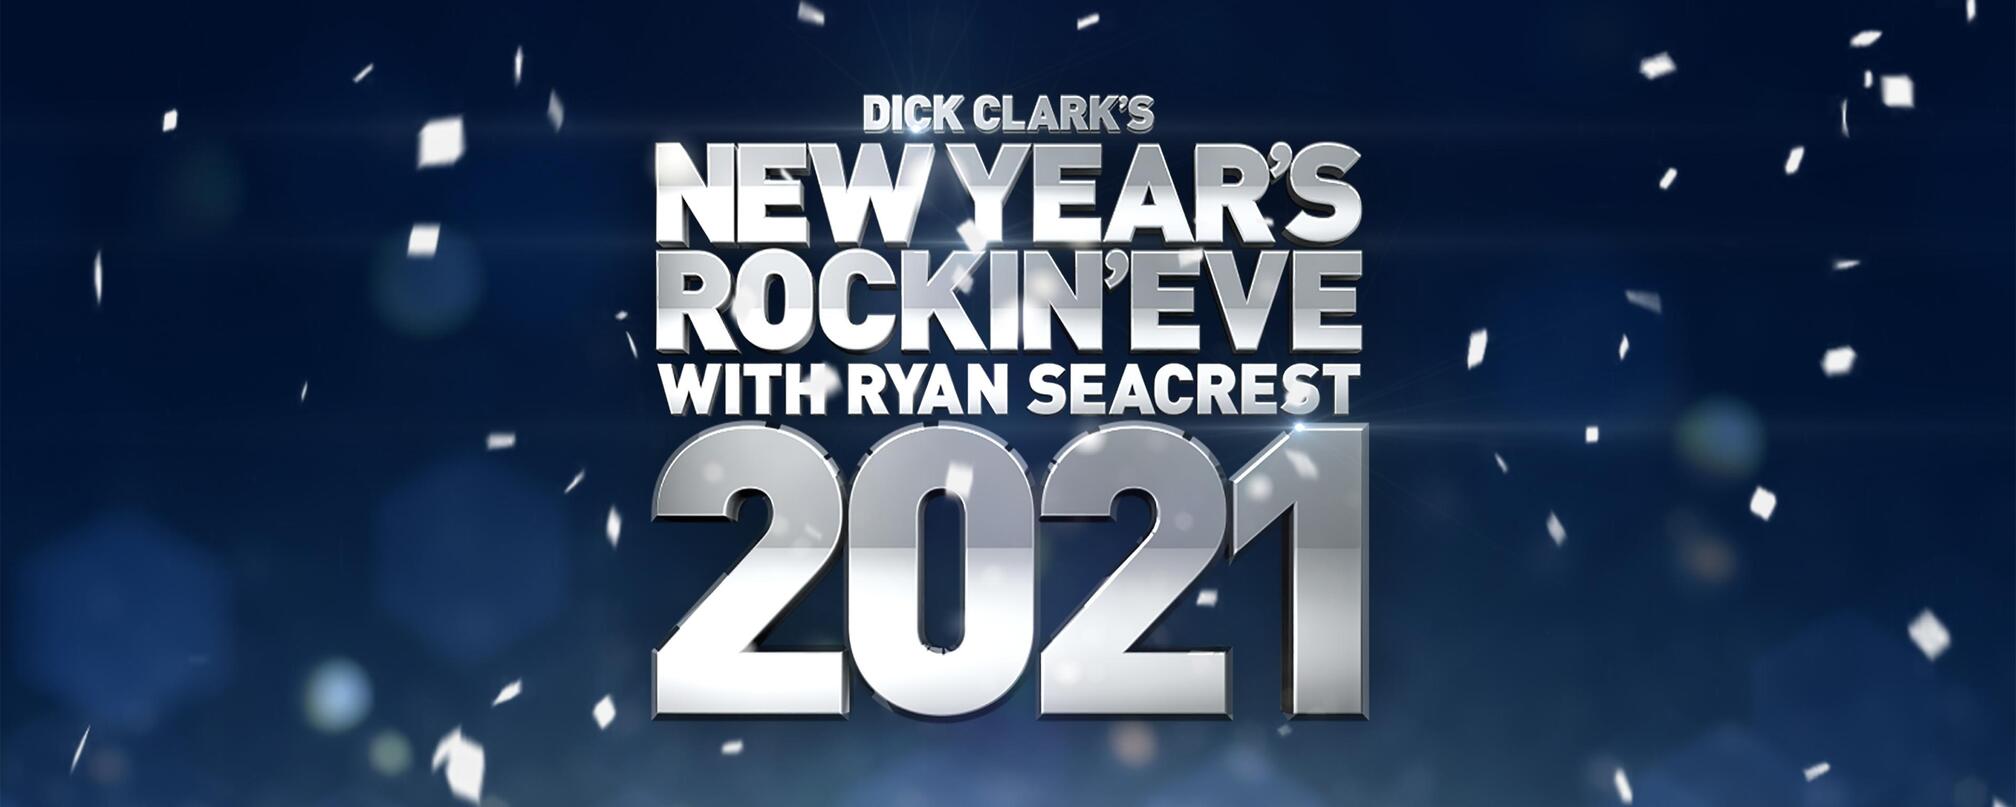 Dick clark new years roku